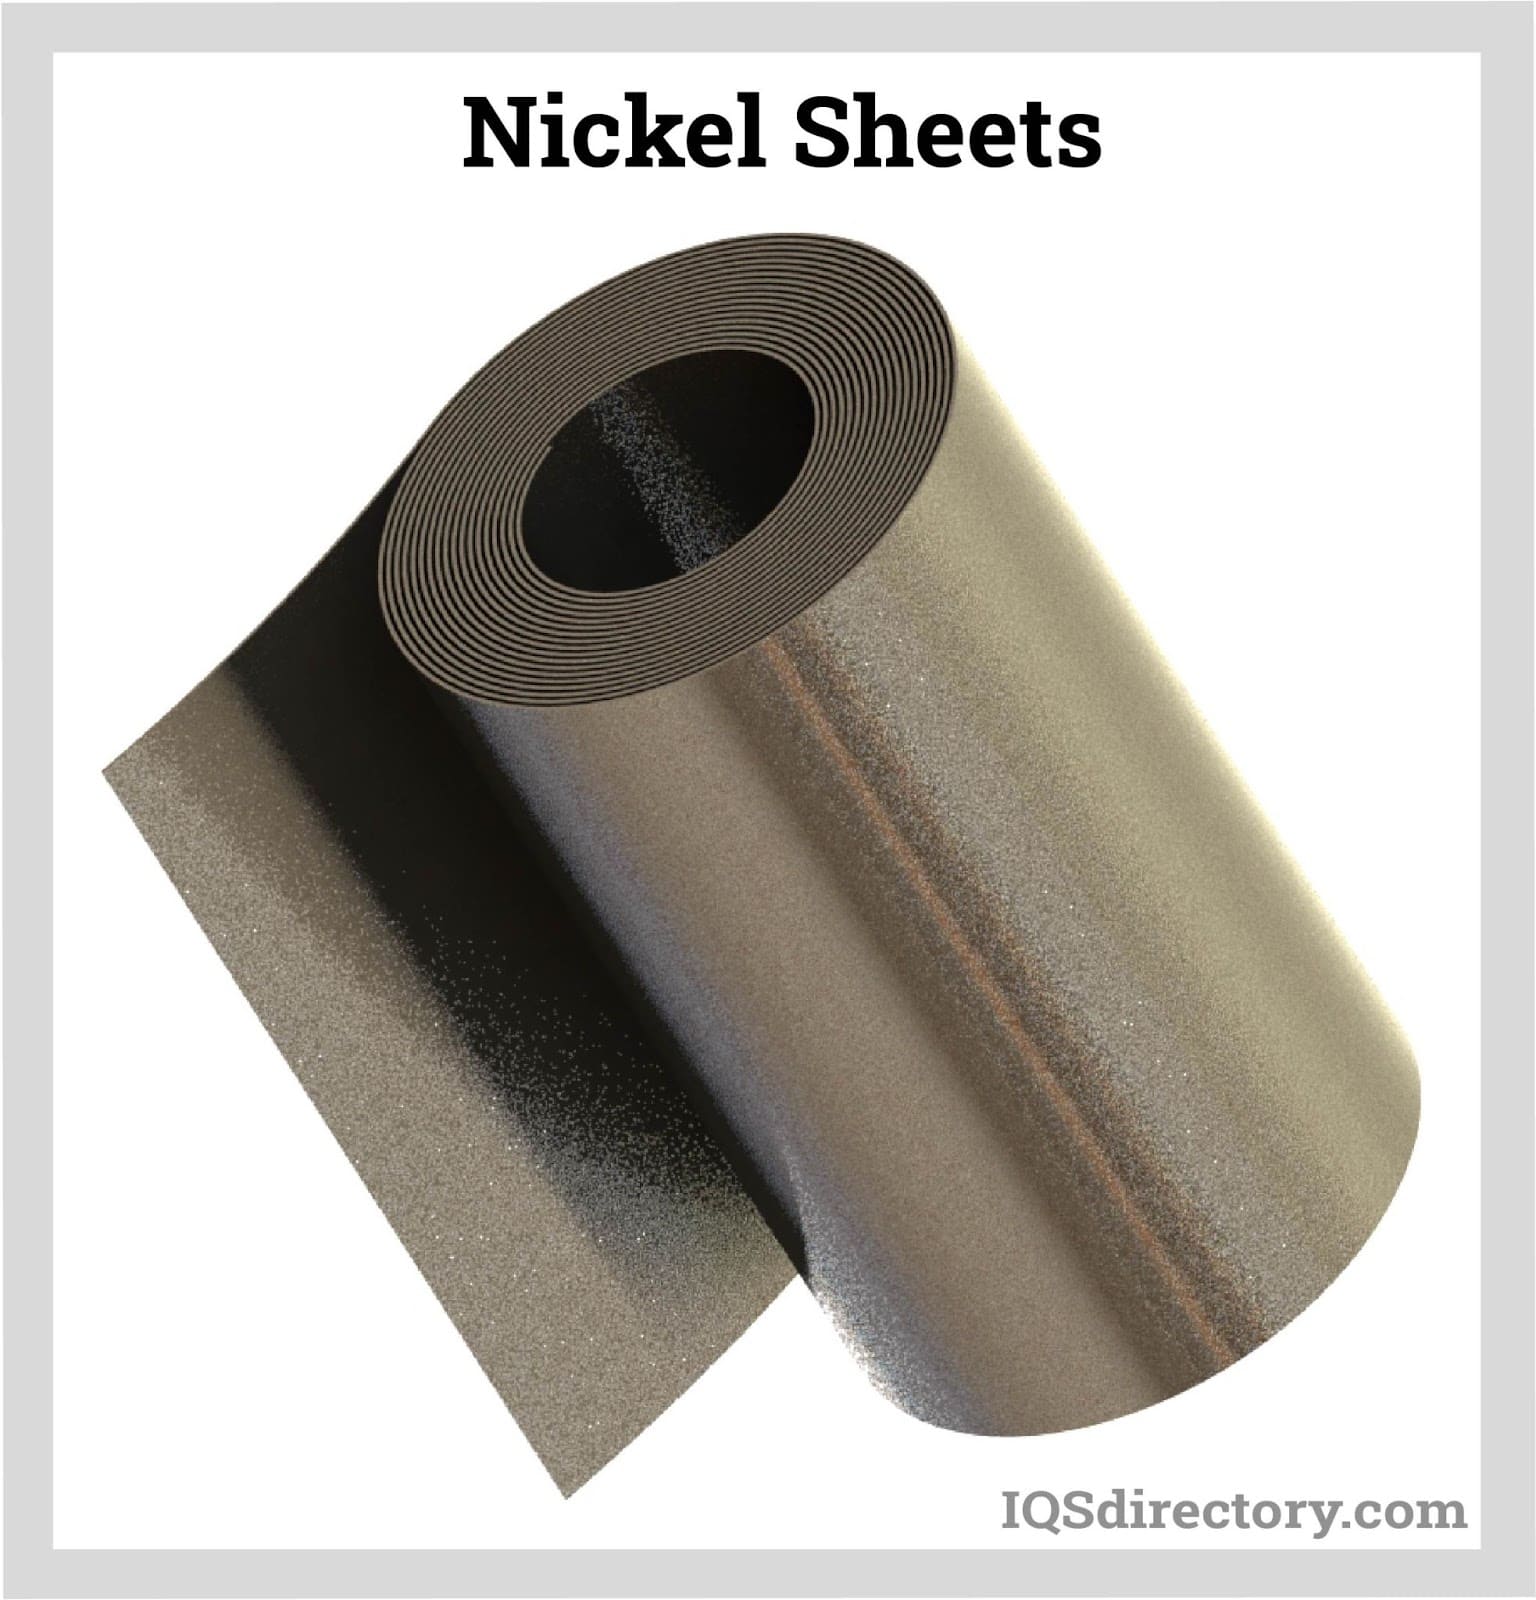 Nickel Sheets